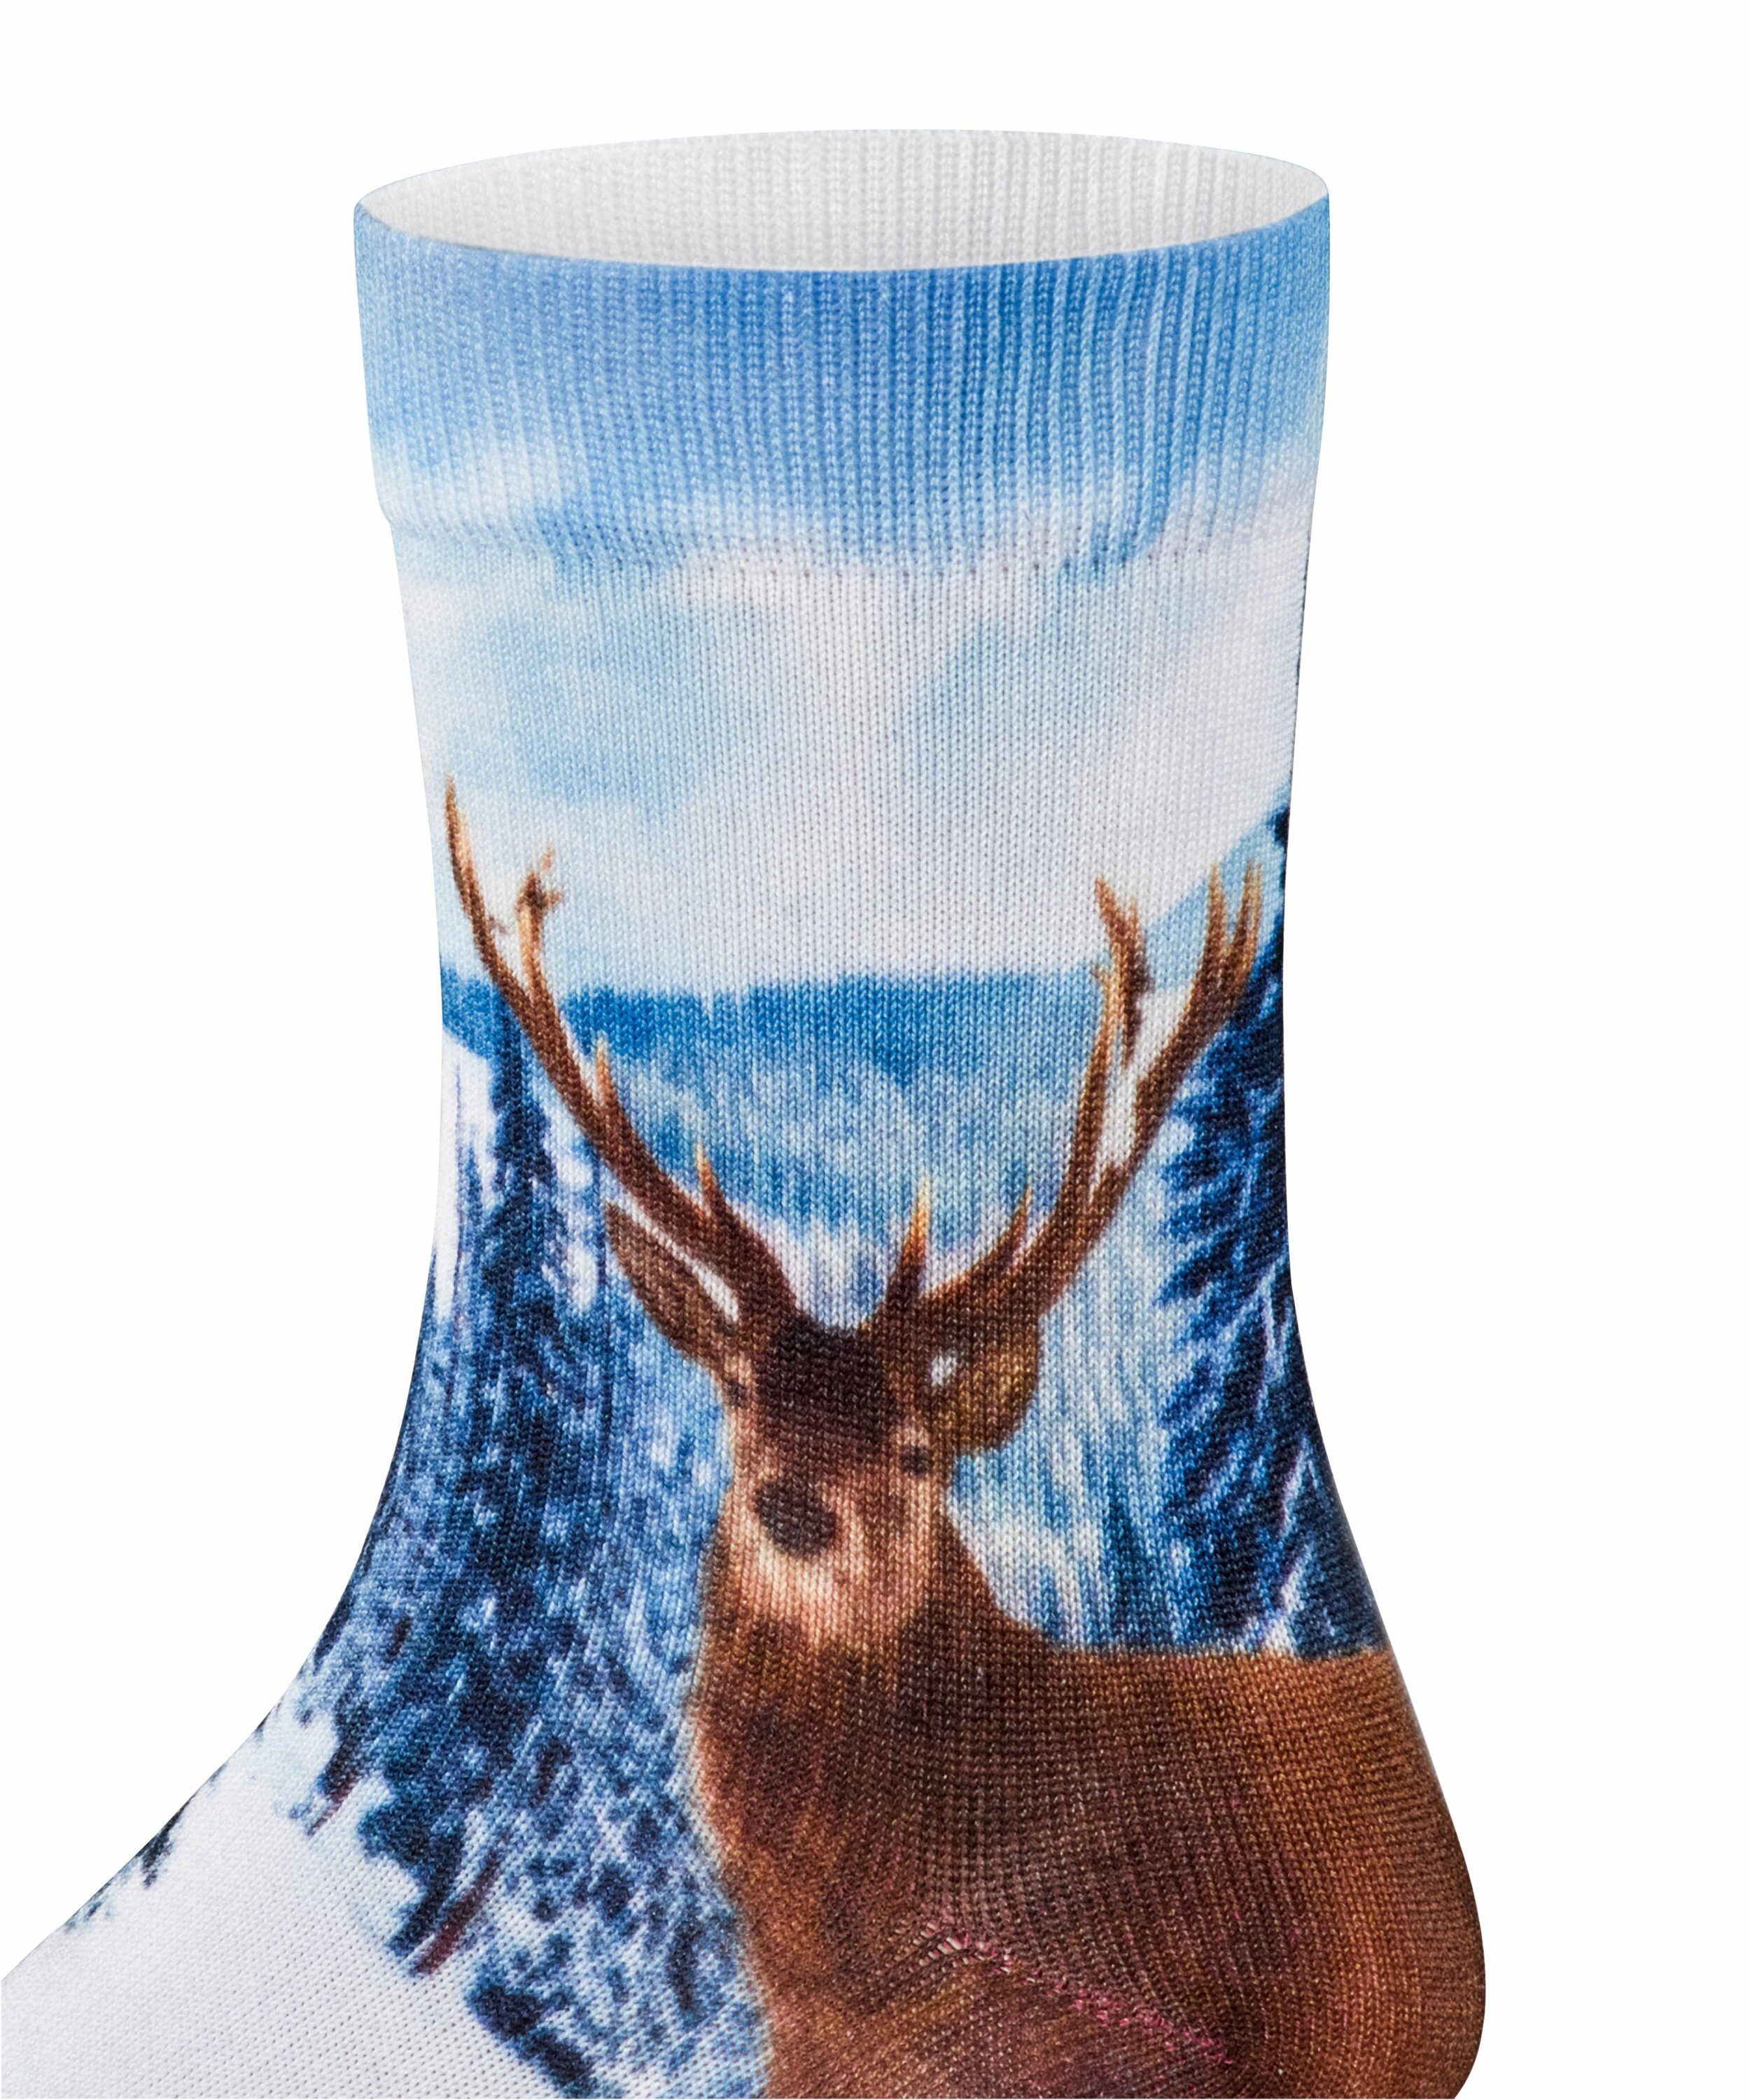 FALKE Socken Print (1-Paar) Deer